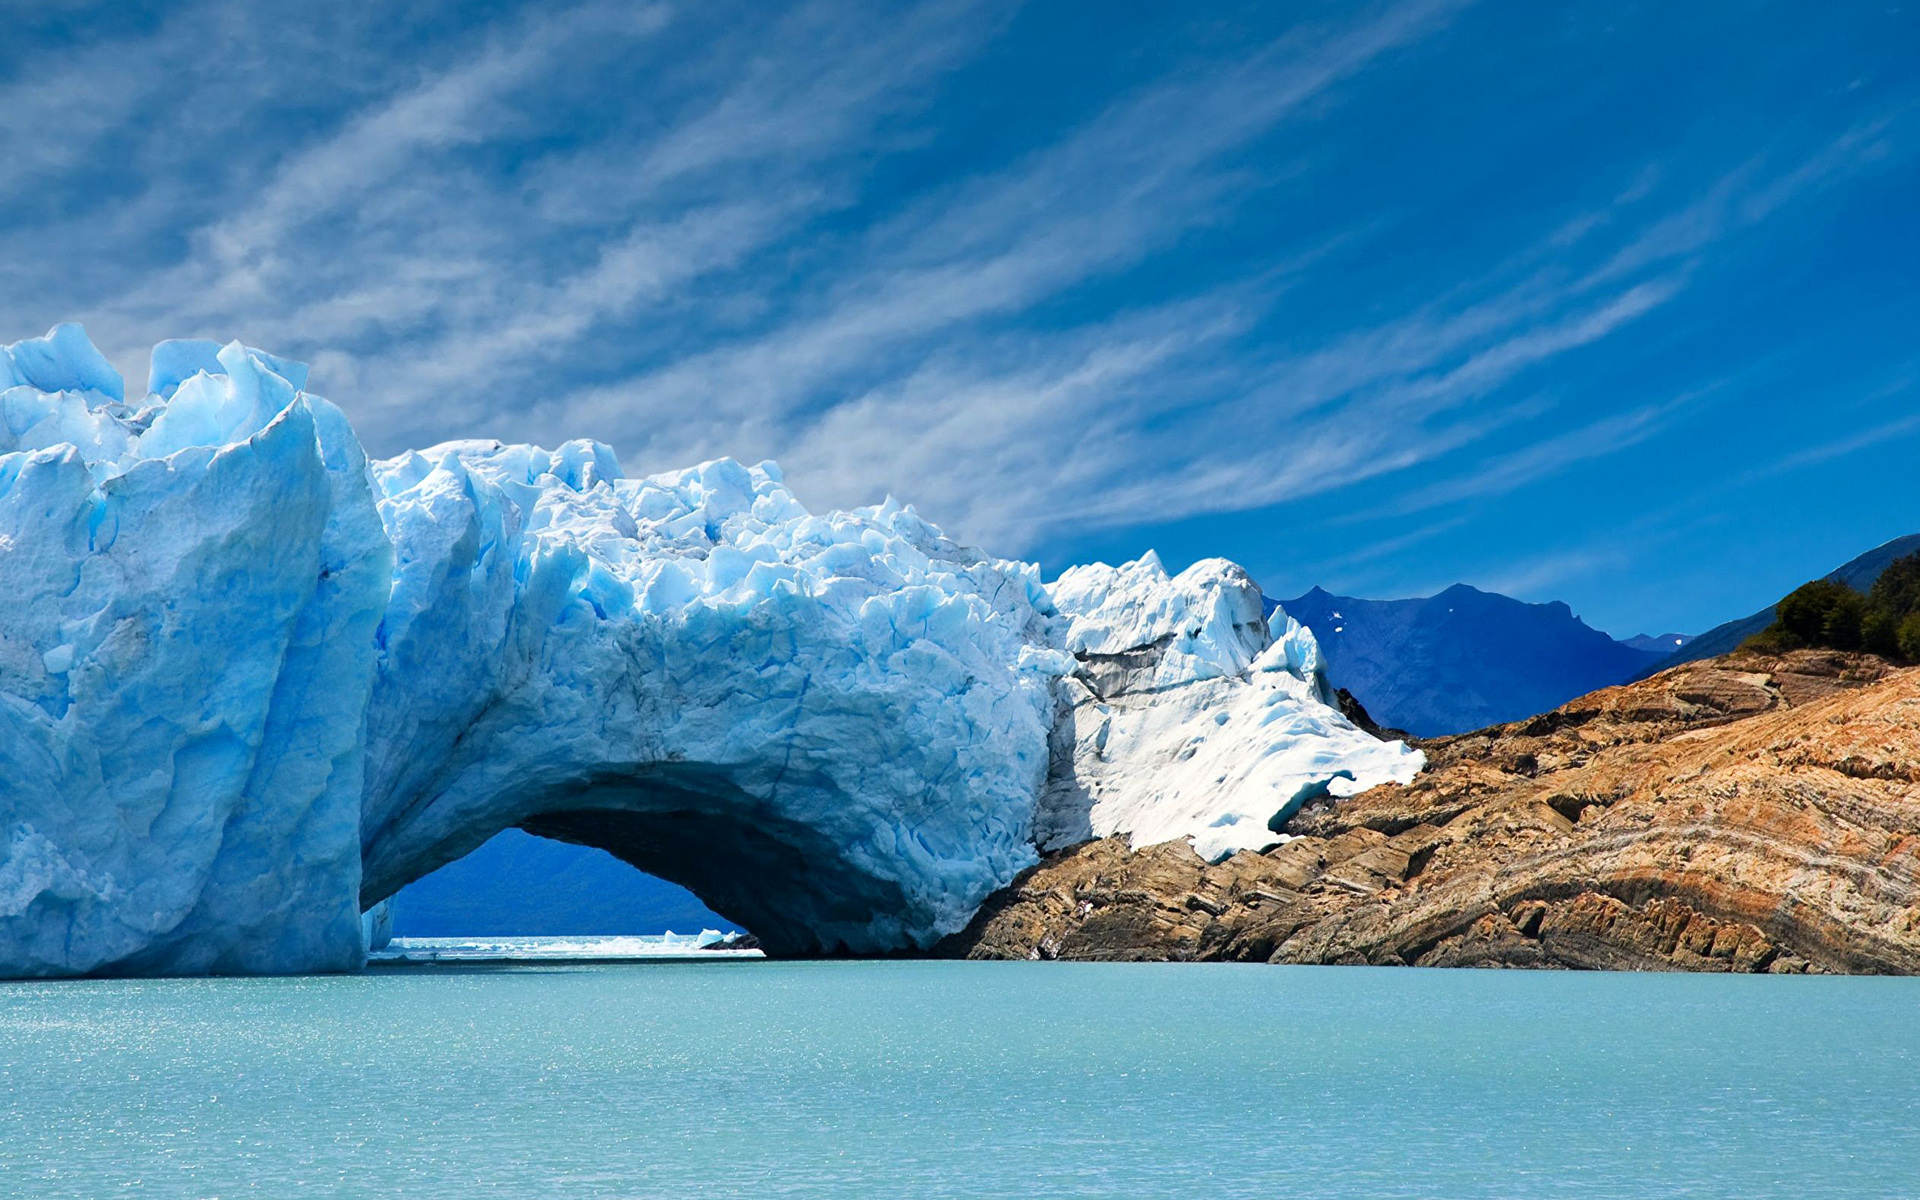  El Calafate é considerada a capital nacional dos glaciares